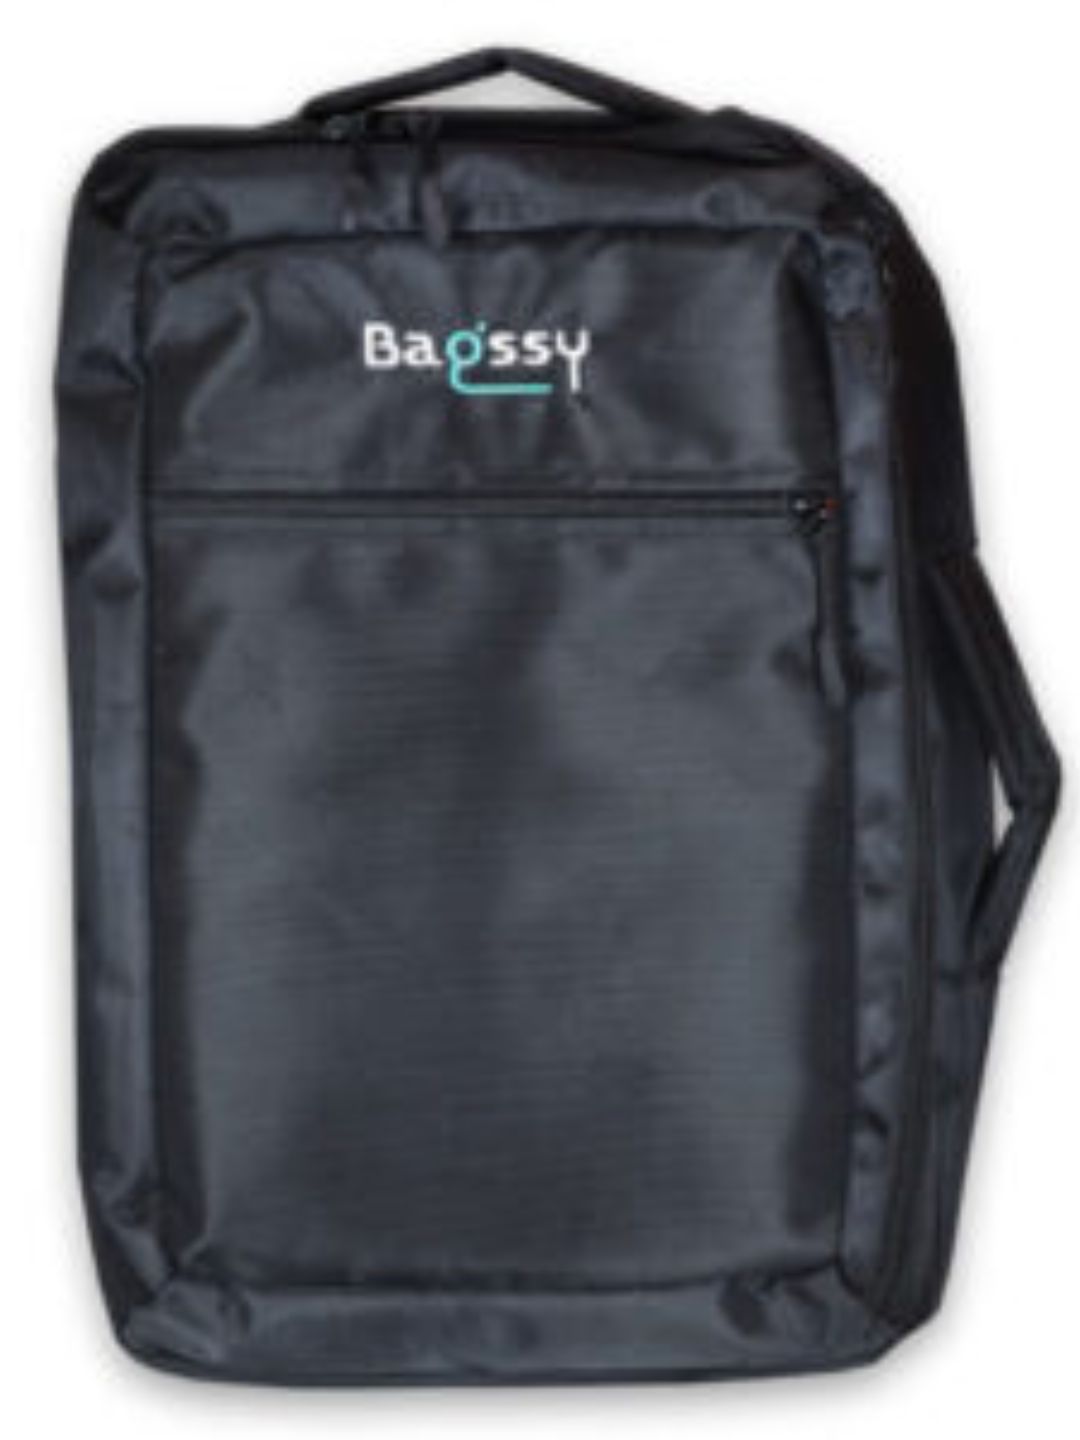 Bagssy Laptop Bag